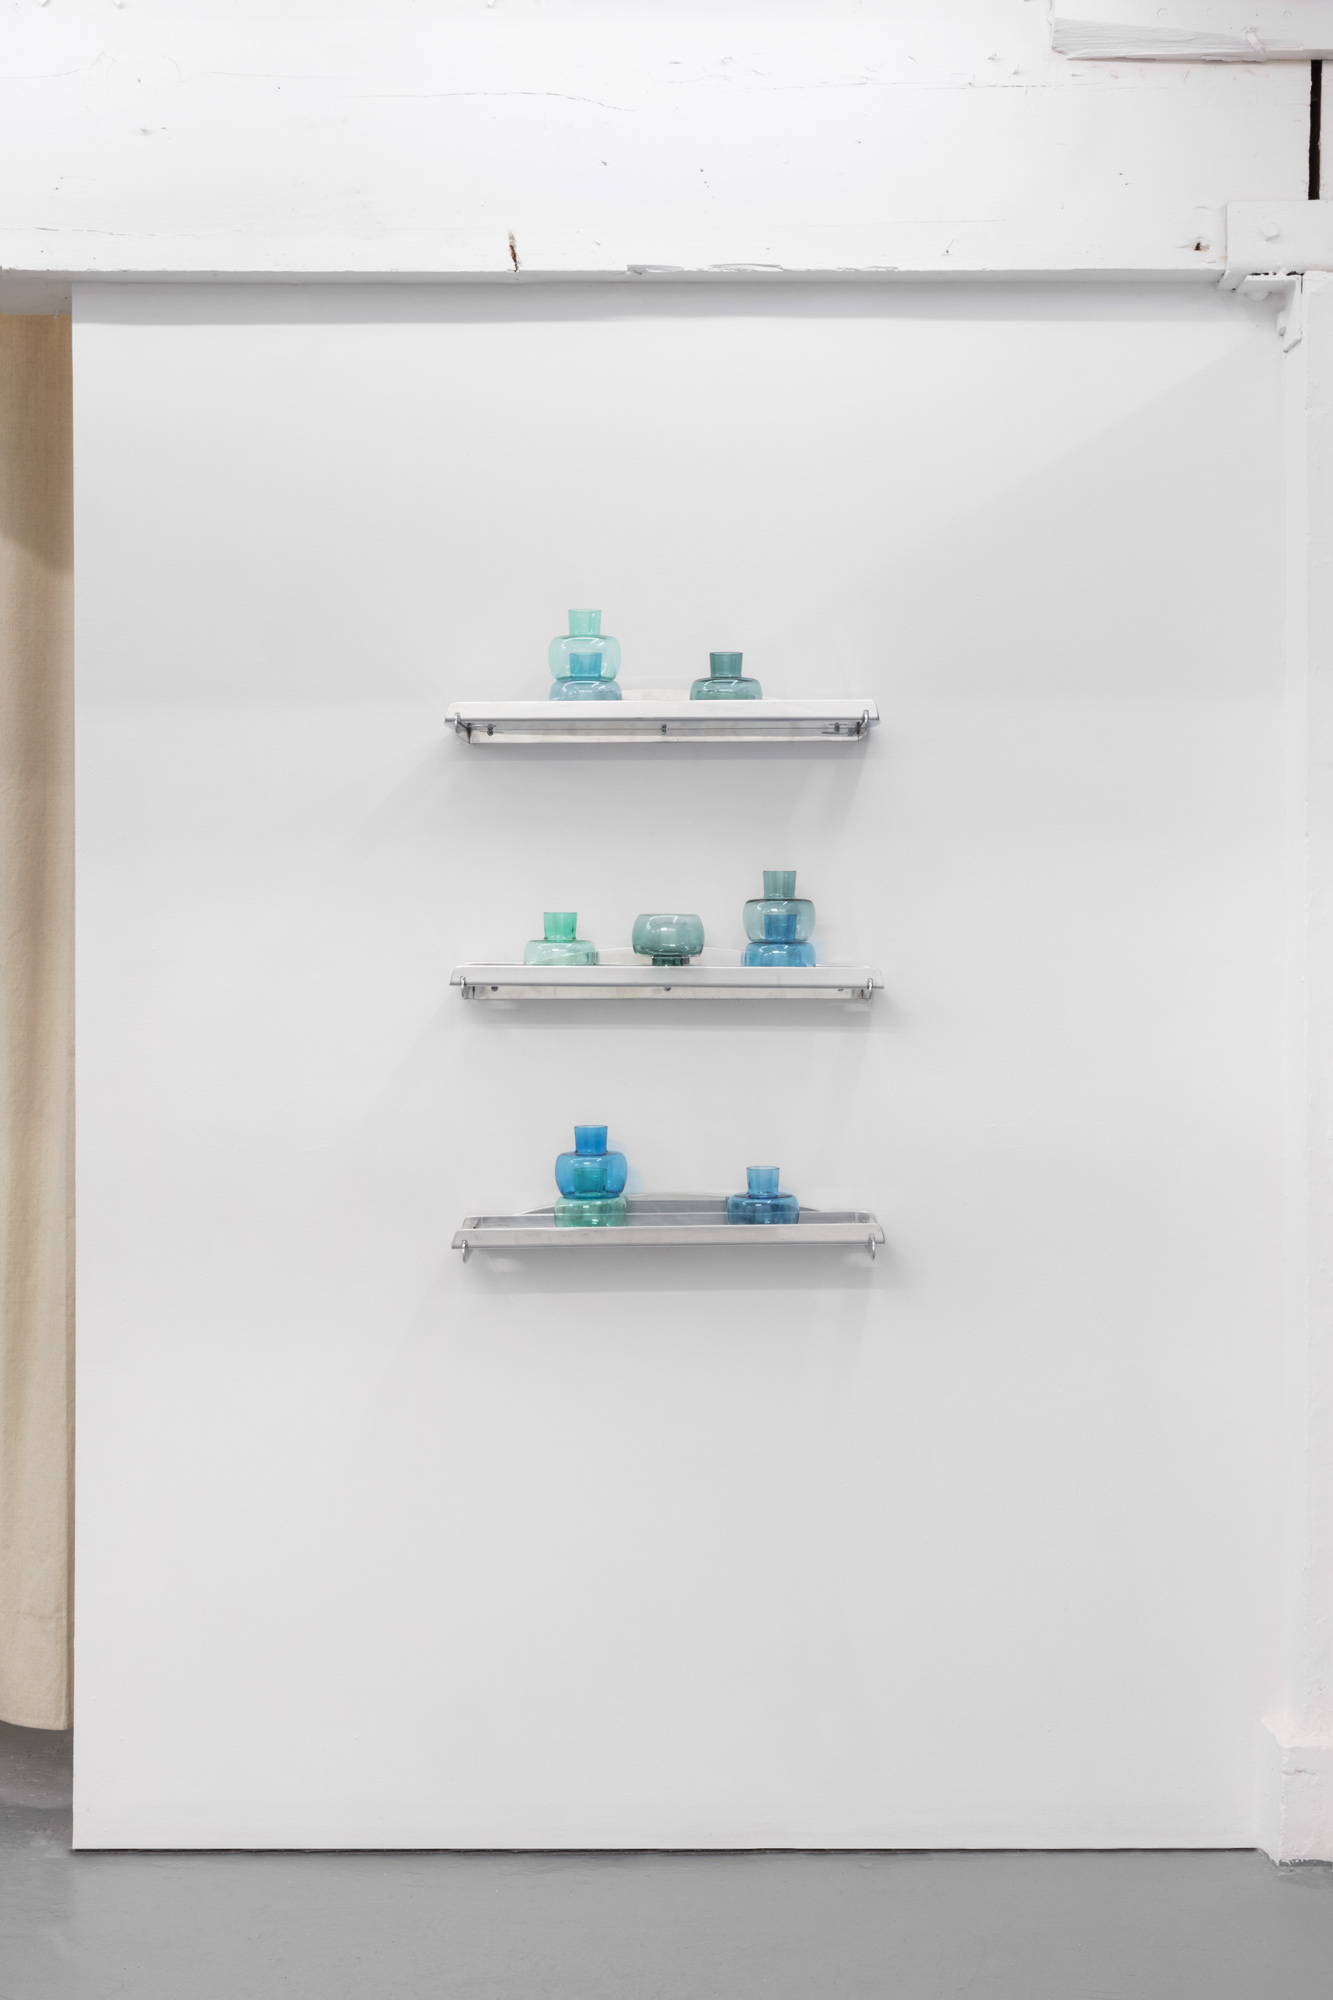  Khalil Jamal,  Neo-float shelf , 2016, Wheel polished aluminum, 24 x 6 x 1 in (60 x 15 x 2.5 cm)  &amp;  Khalil Jamal,  Buoy tea-light holders , 2016 Mouth blown glass, 4 x 5 in (10 x 13 cm) 